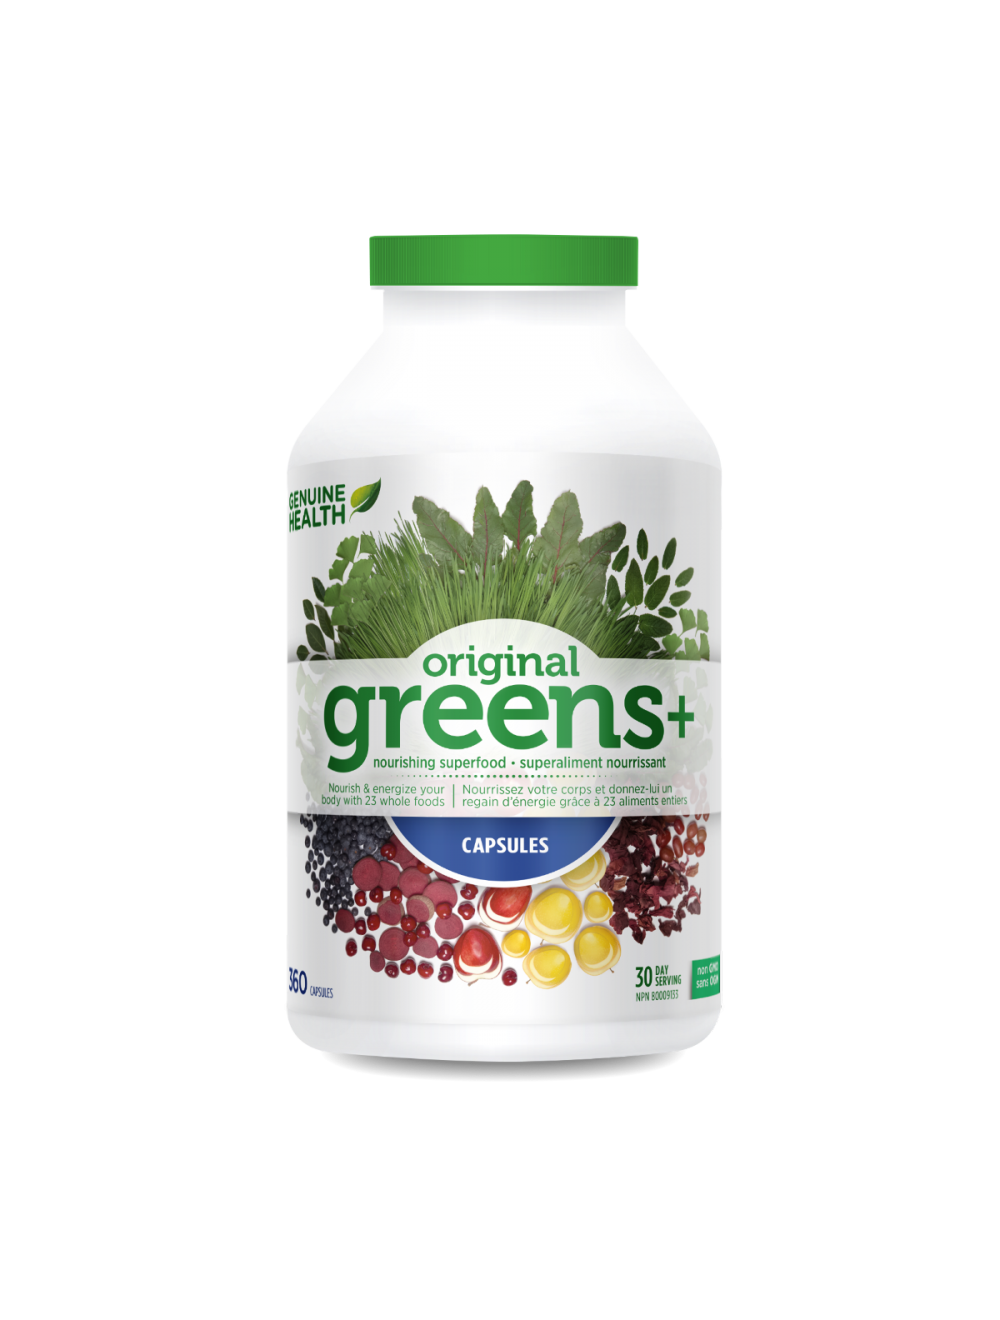 Genuine Health greens+ capsules